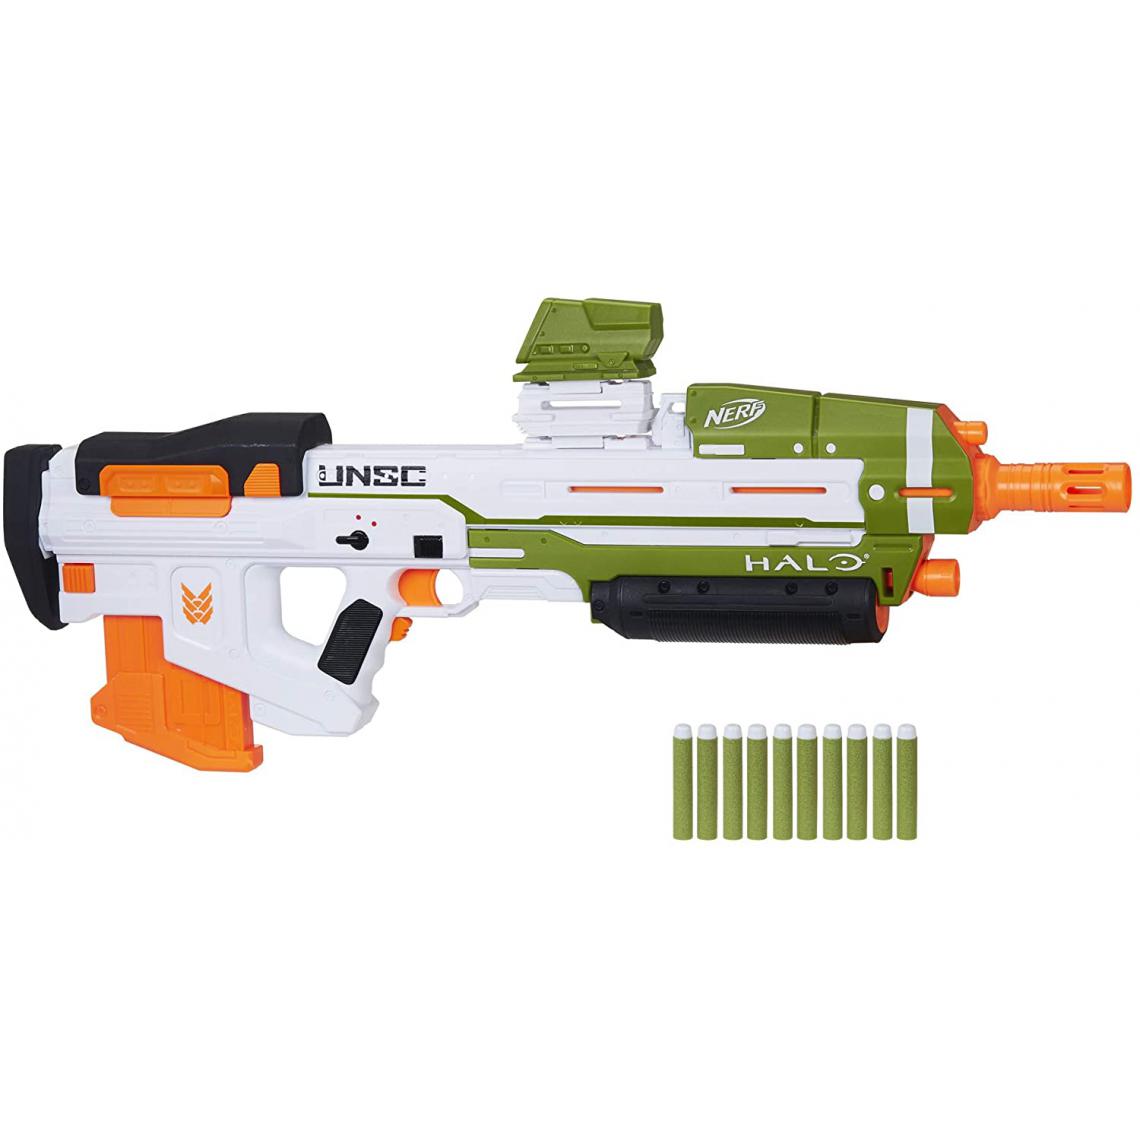 Nerf - pistolet et flechettes Nerf Elite Officielles vert orange blanc - Jeux d'adresse